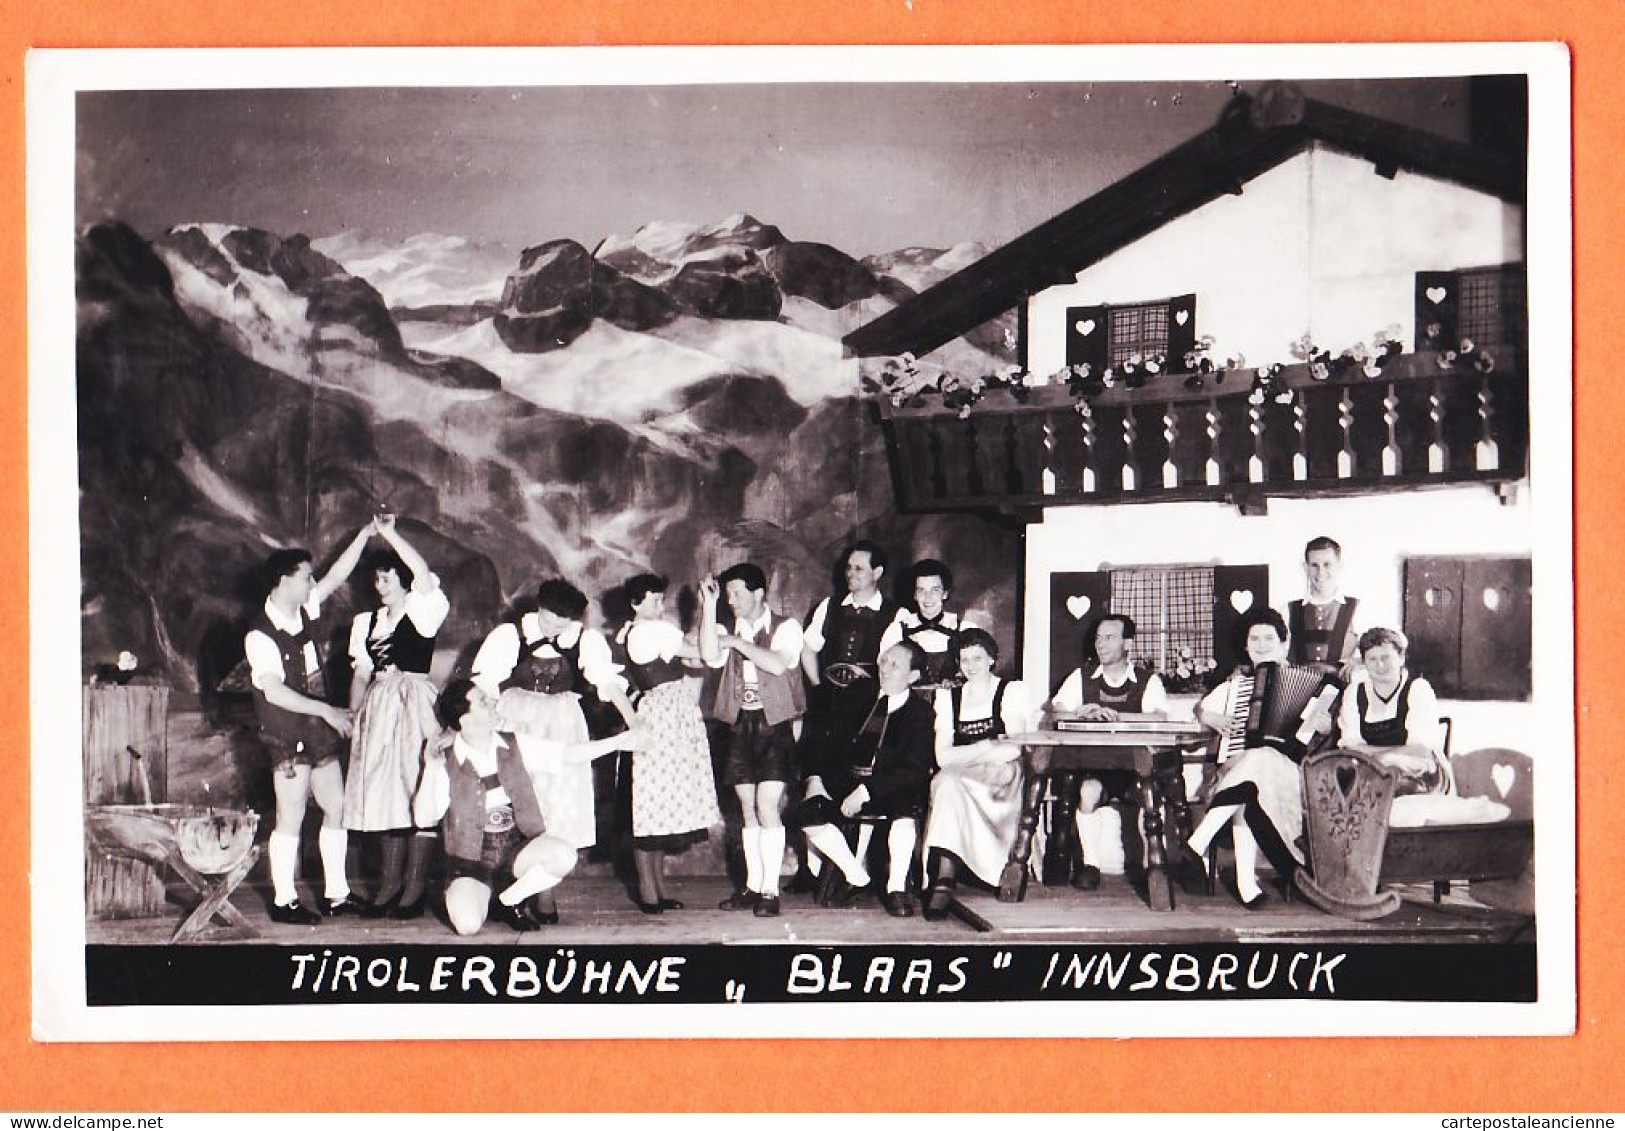 23614 / INNSBRUCK (3) TIROLERBÜHNE BLASS 1950s Fotograf Richard MULLER Muscumstrasse 31 Autriche Österreich Austria - Innsbruck